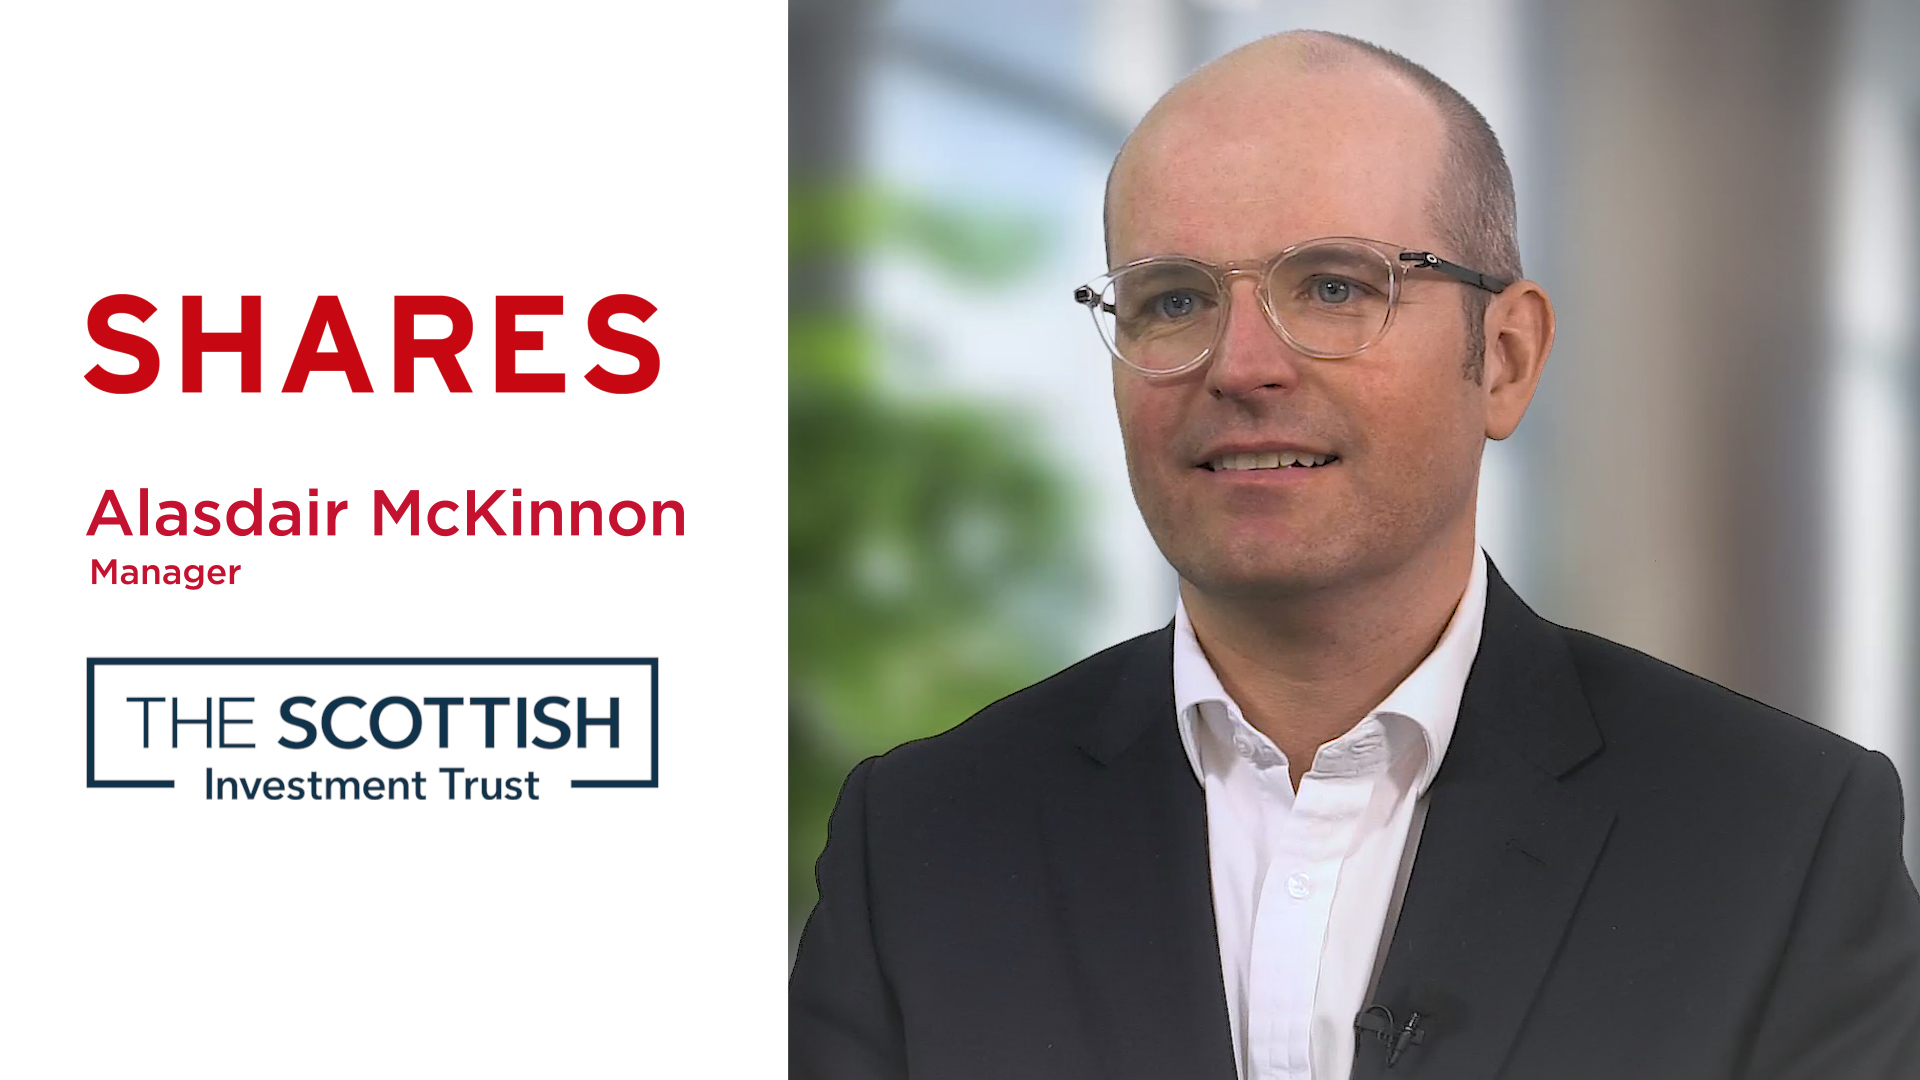 The Scottish Investment Trust - Alasdair McKinnon, Manager